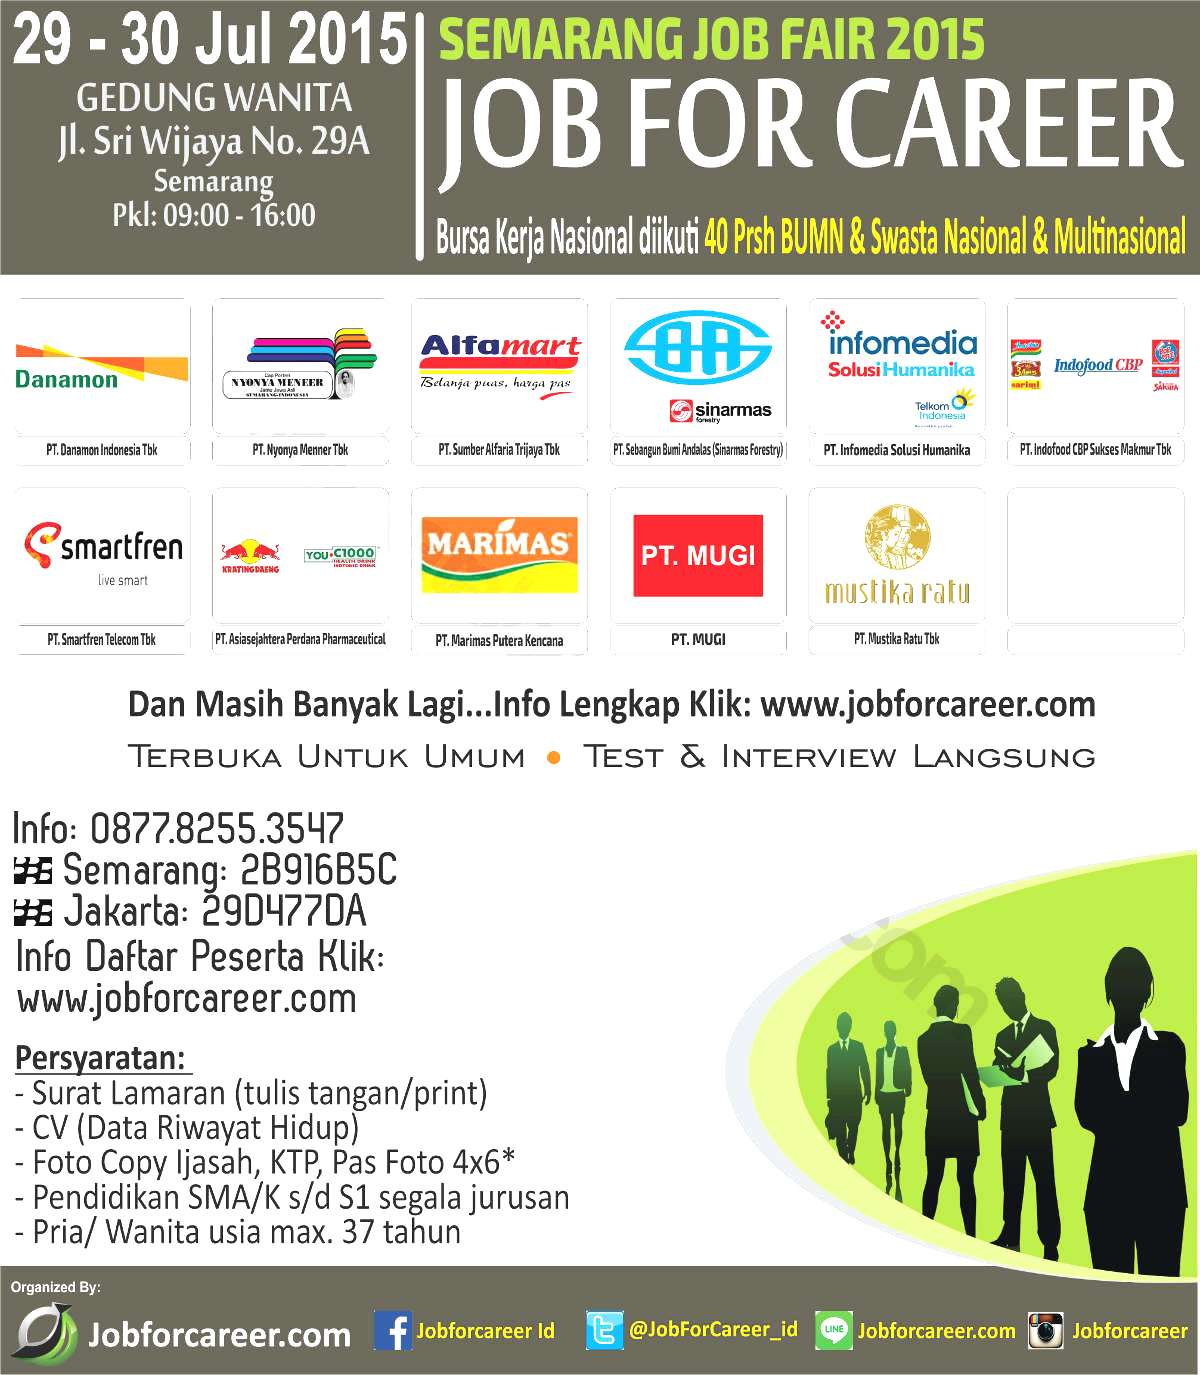 Jadwal Job Fair Di Semarang Juli 2015 Dunia Lowongan Kerja